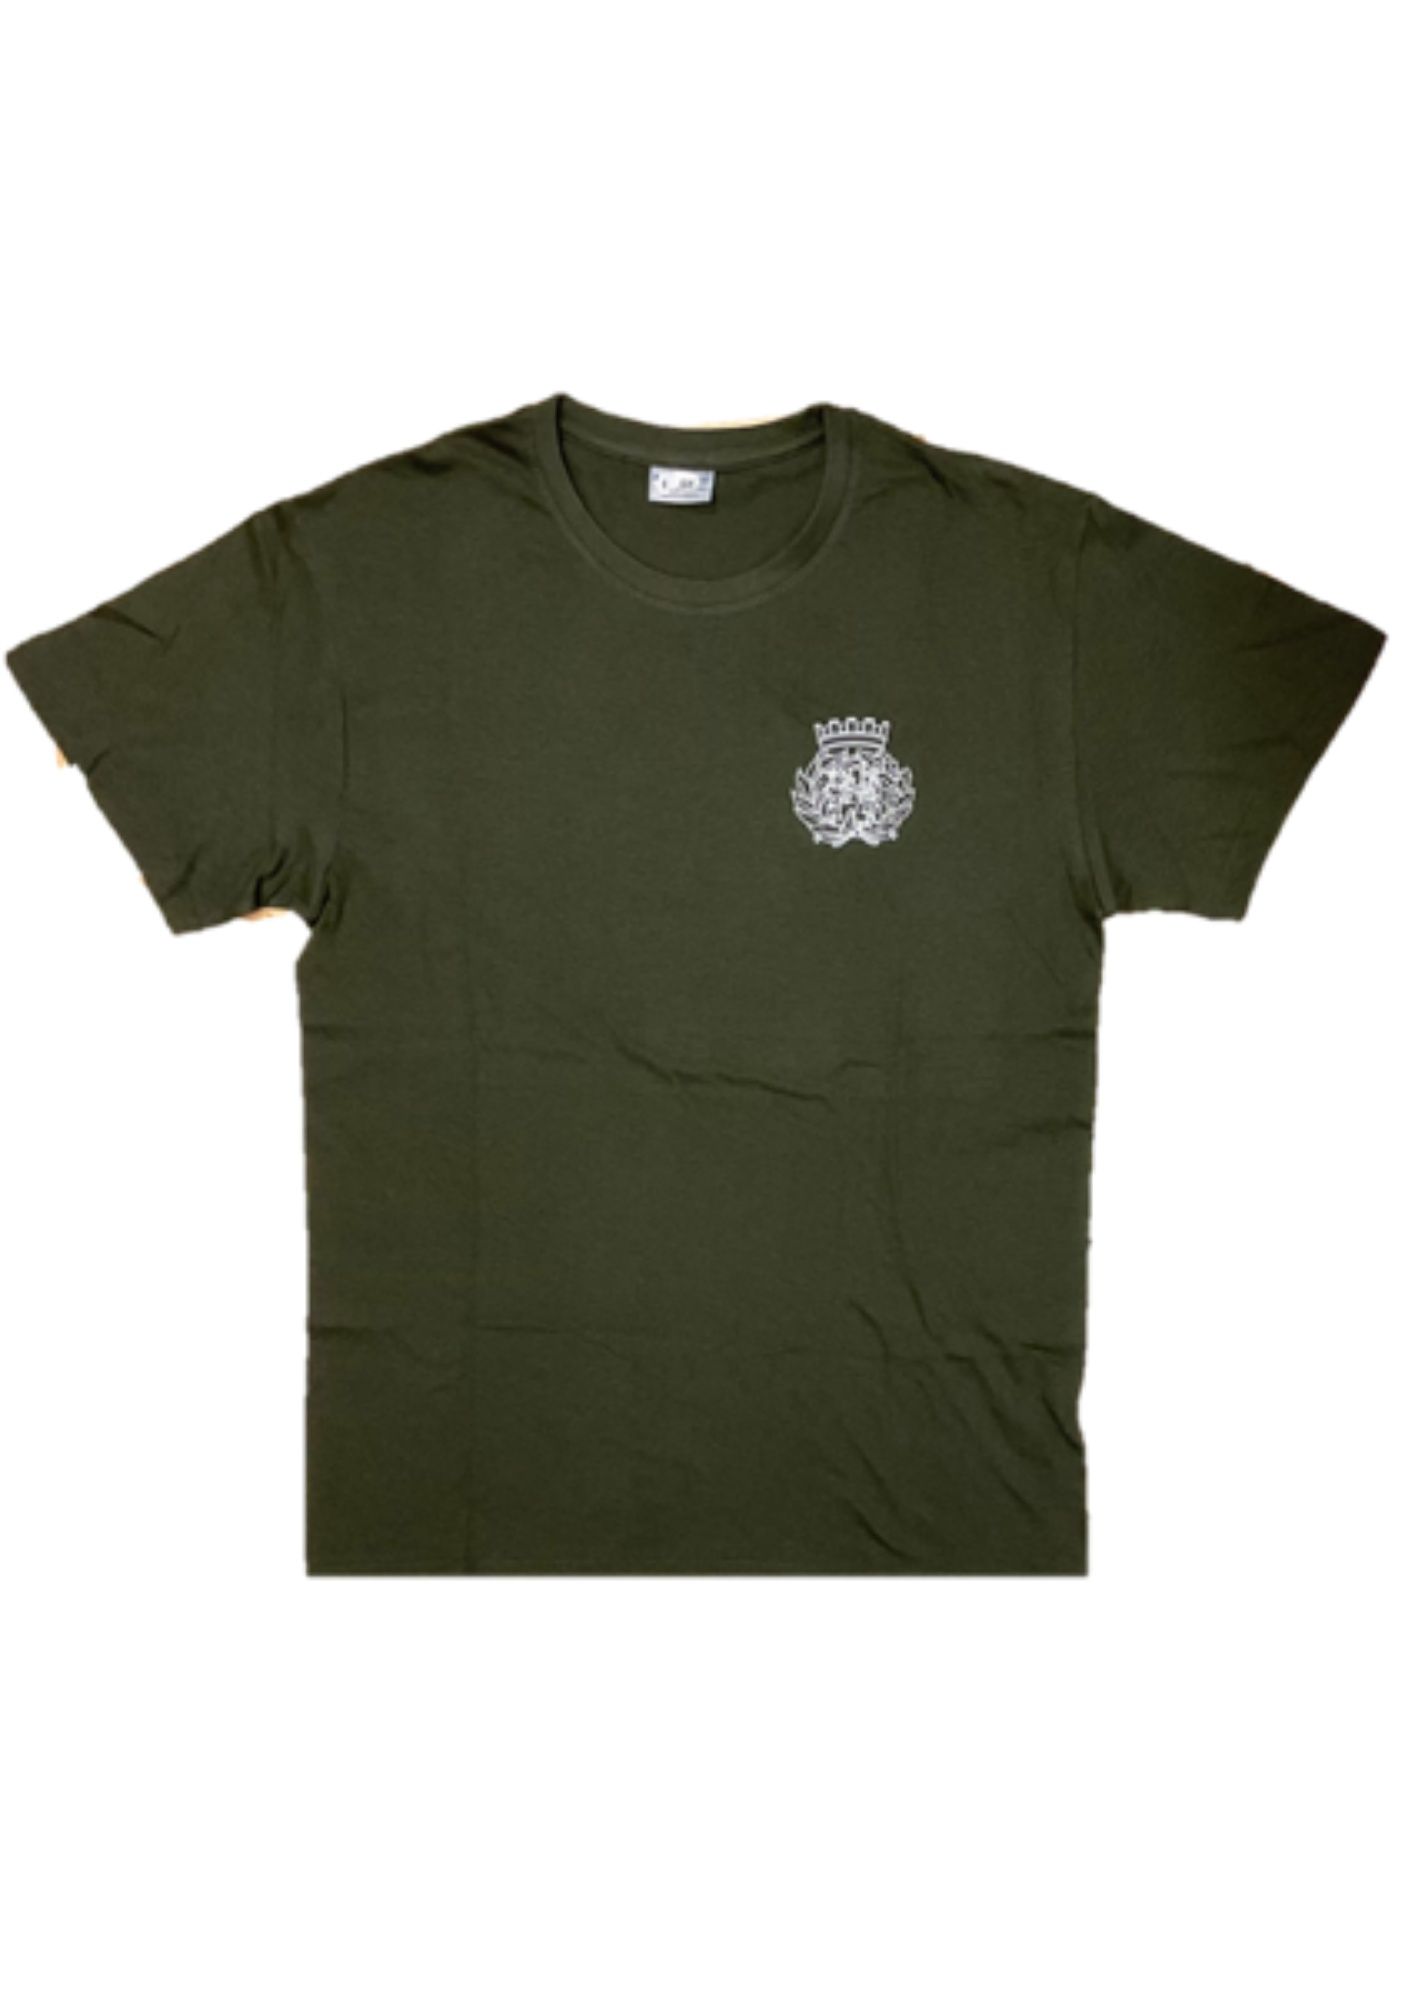 T-shirts verdes exército português